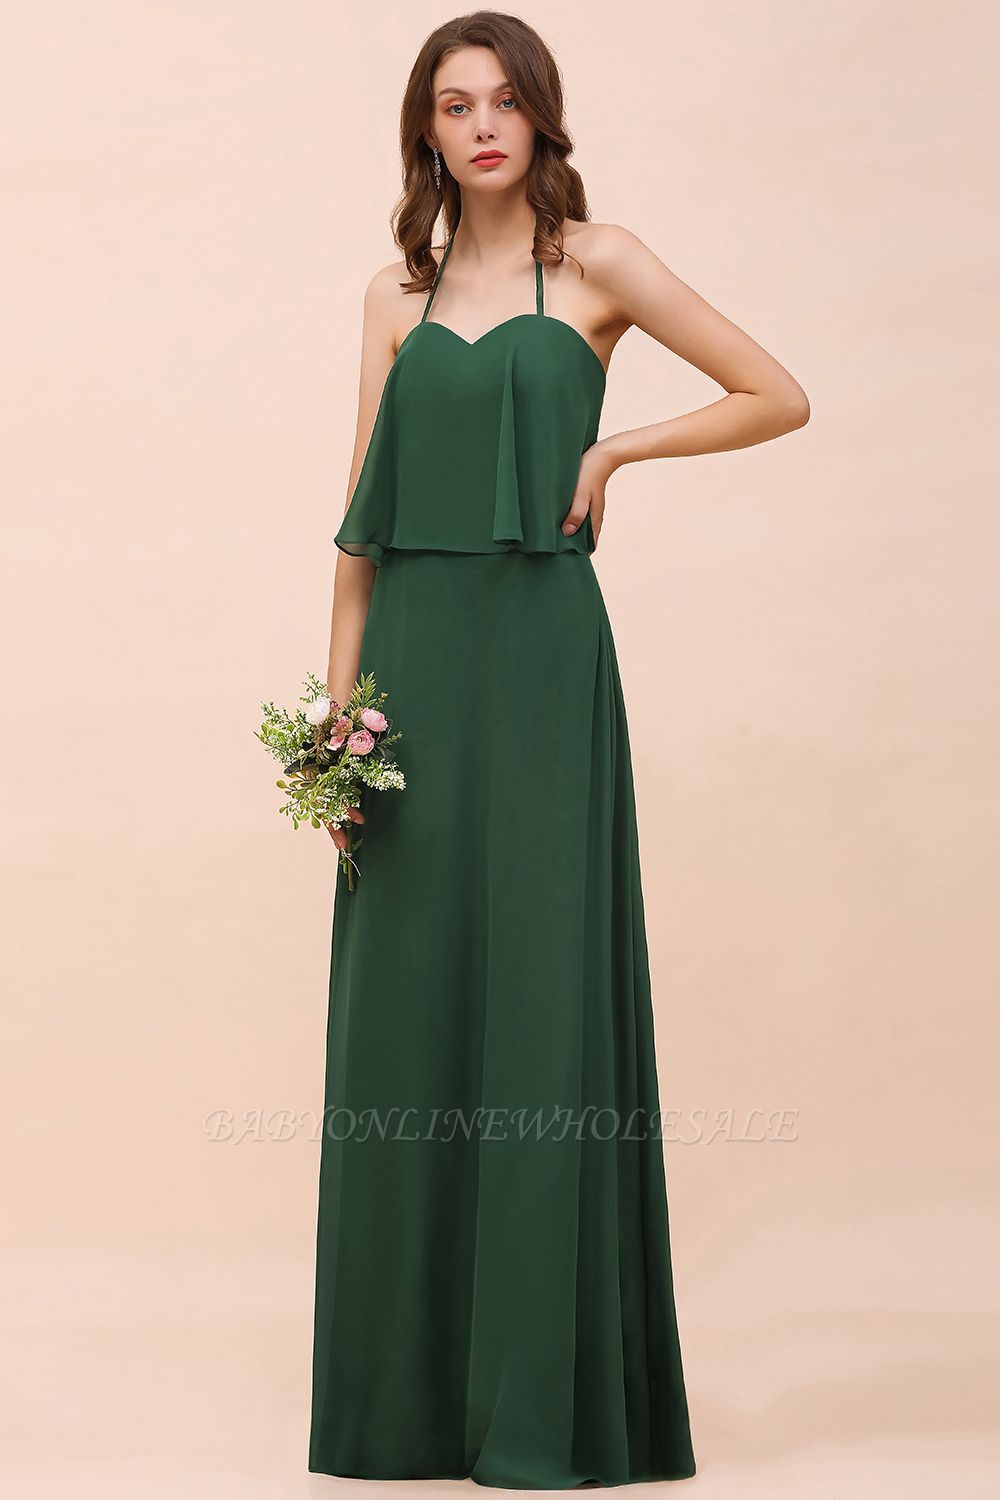 green Chiffon Bridesmaid Dress Casual Evening Party Dress